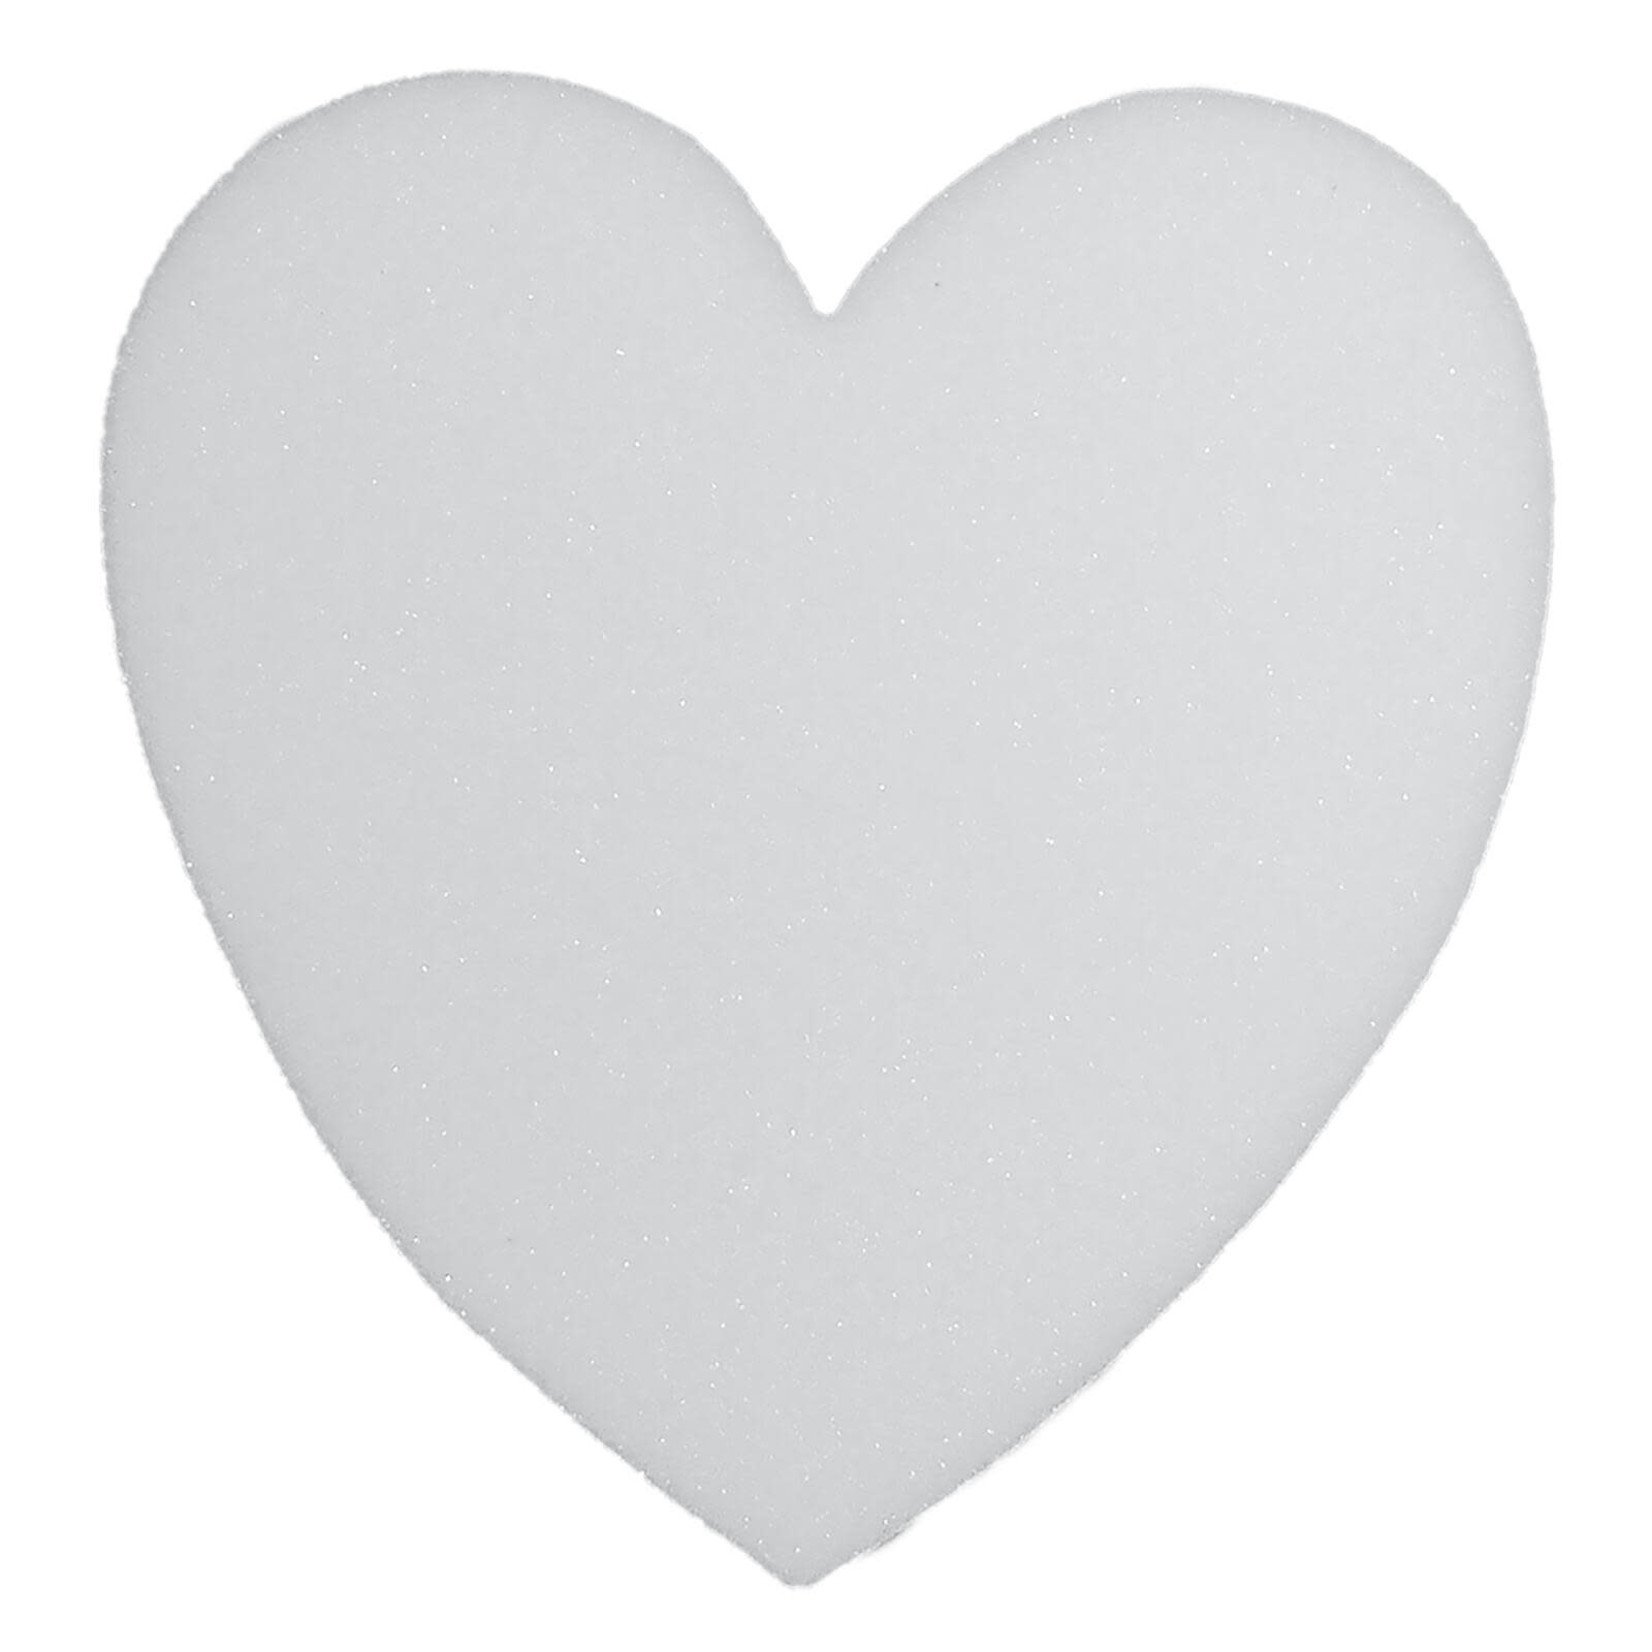 16x2"" White solid STYROFOAM Heart